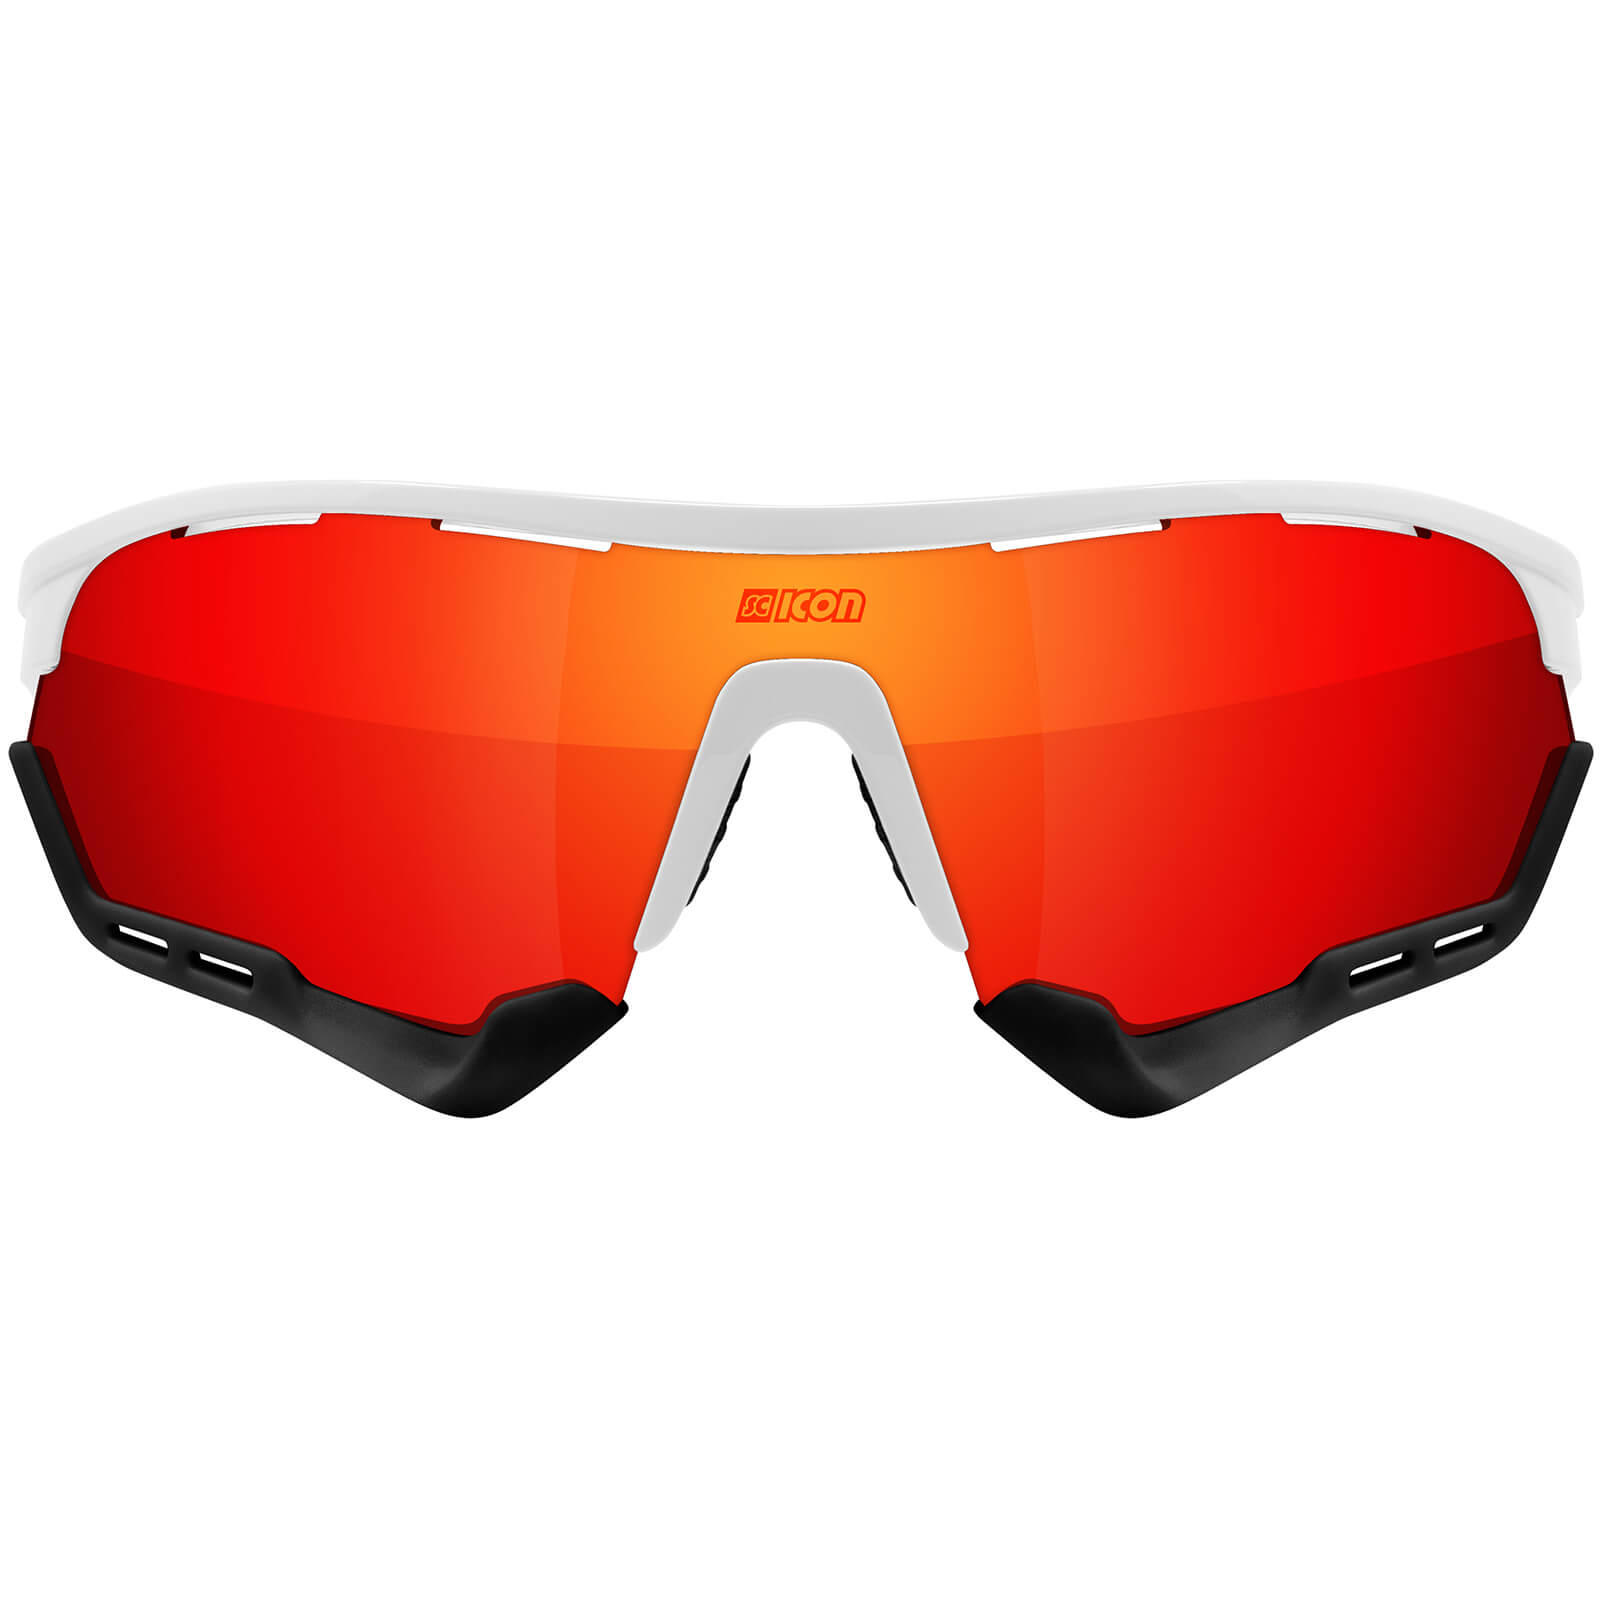 Scicon Aerotech XL Road Sunglasses - White Gloss - Multilaser Red